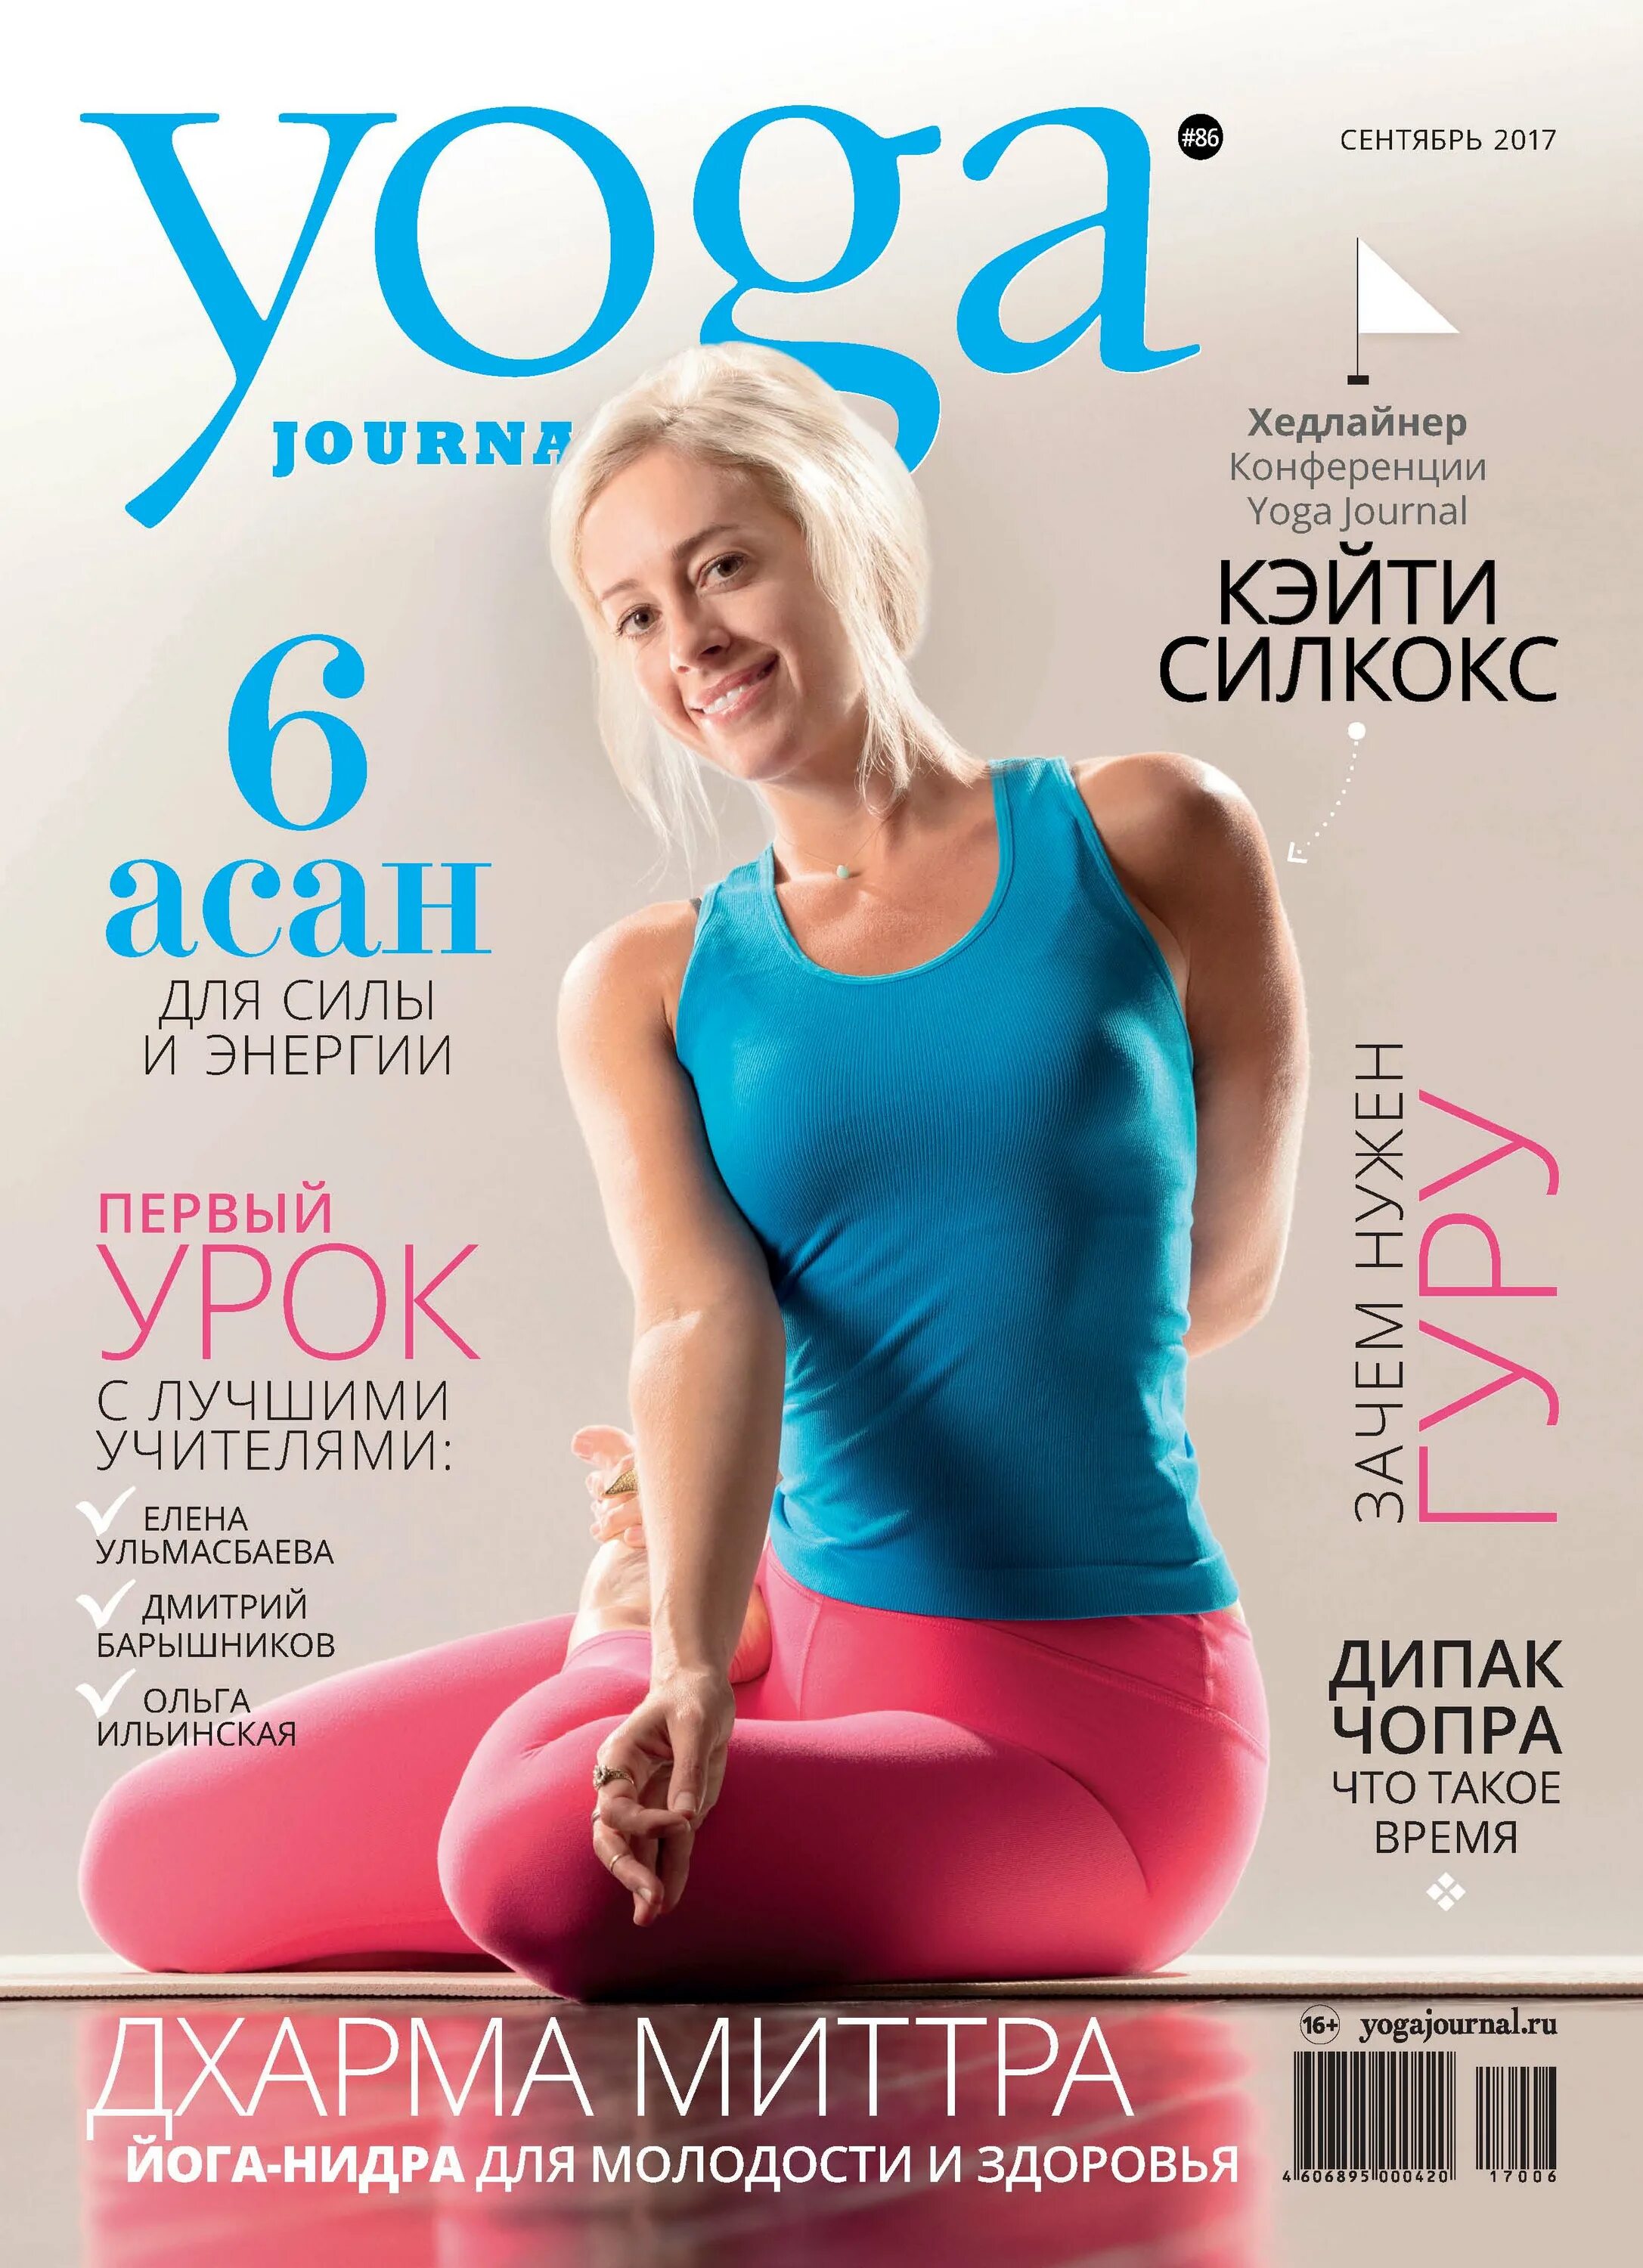 Книга йога отзывы. Йога журнал. Йога книга. Журнал йога 2017. Yoga Journal Russia.